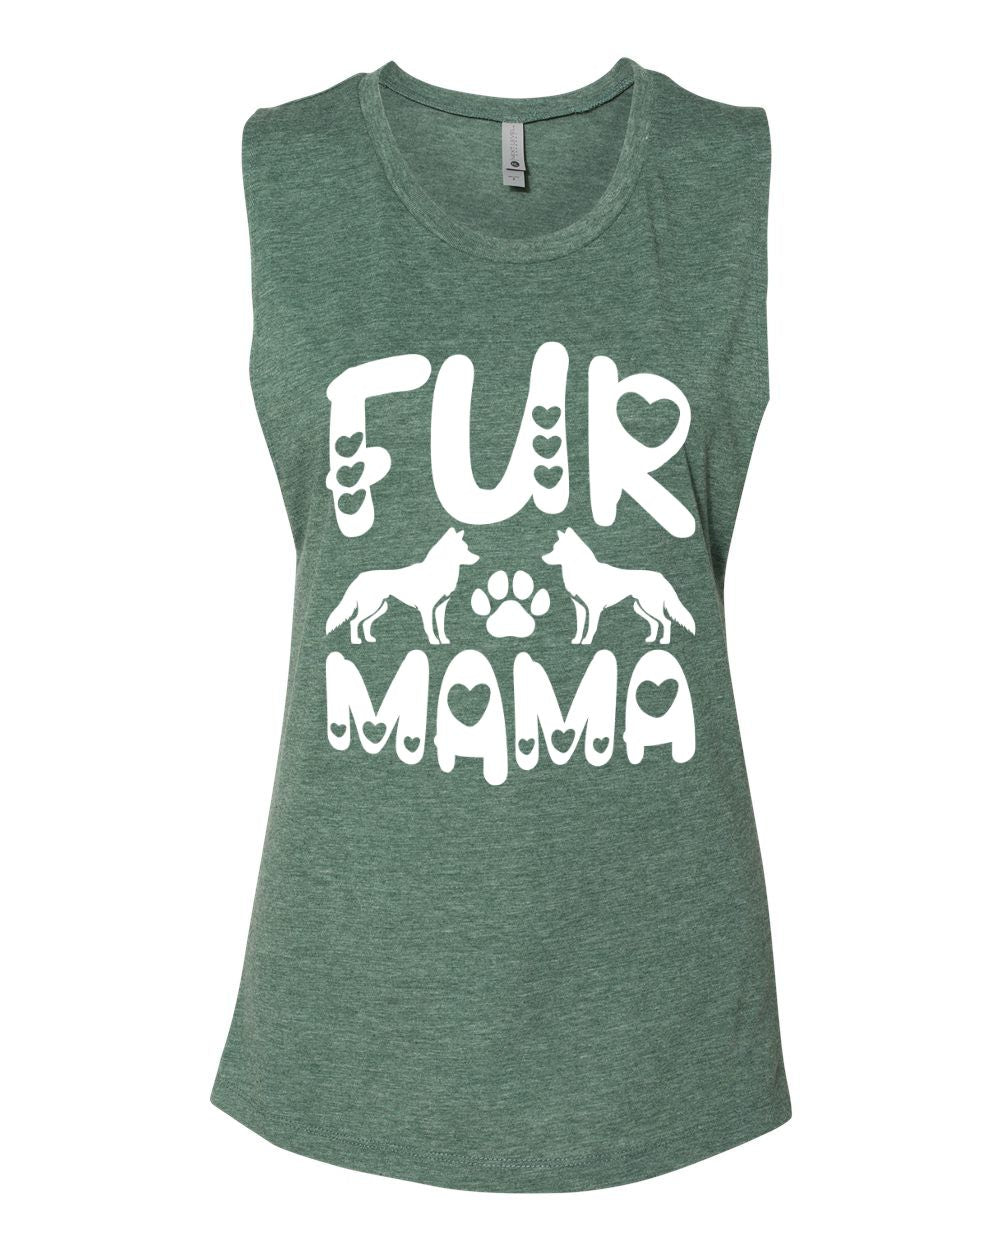 Fur Mama Siberian Husky Muscle Tank